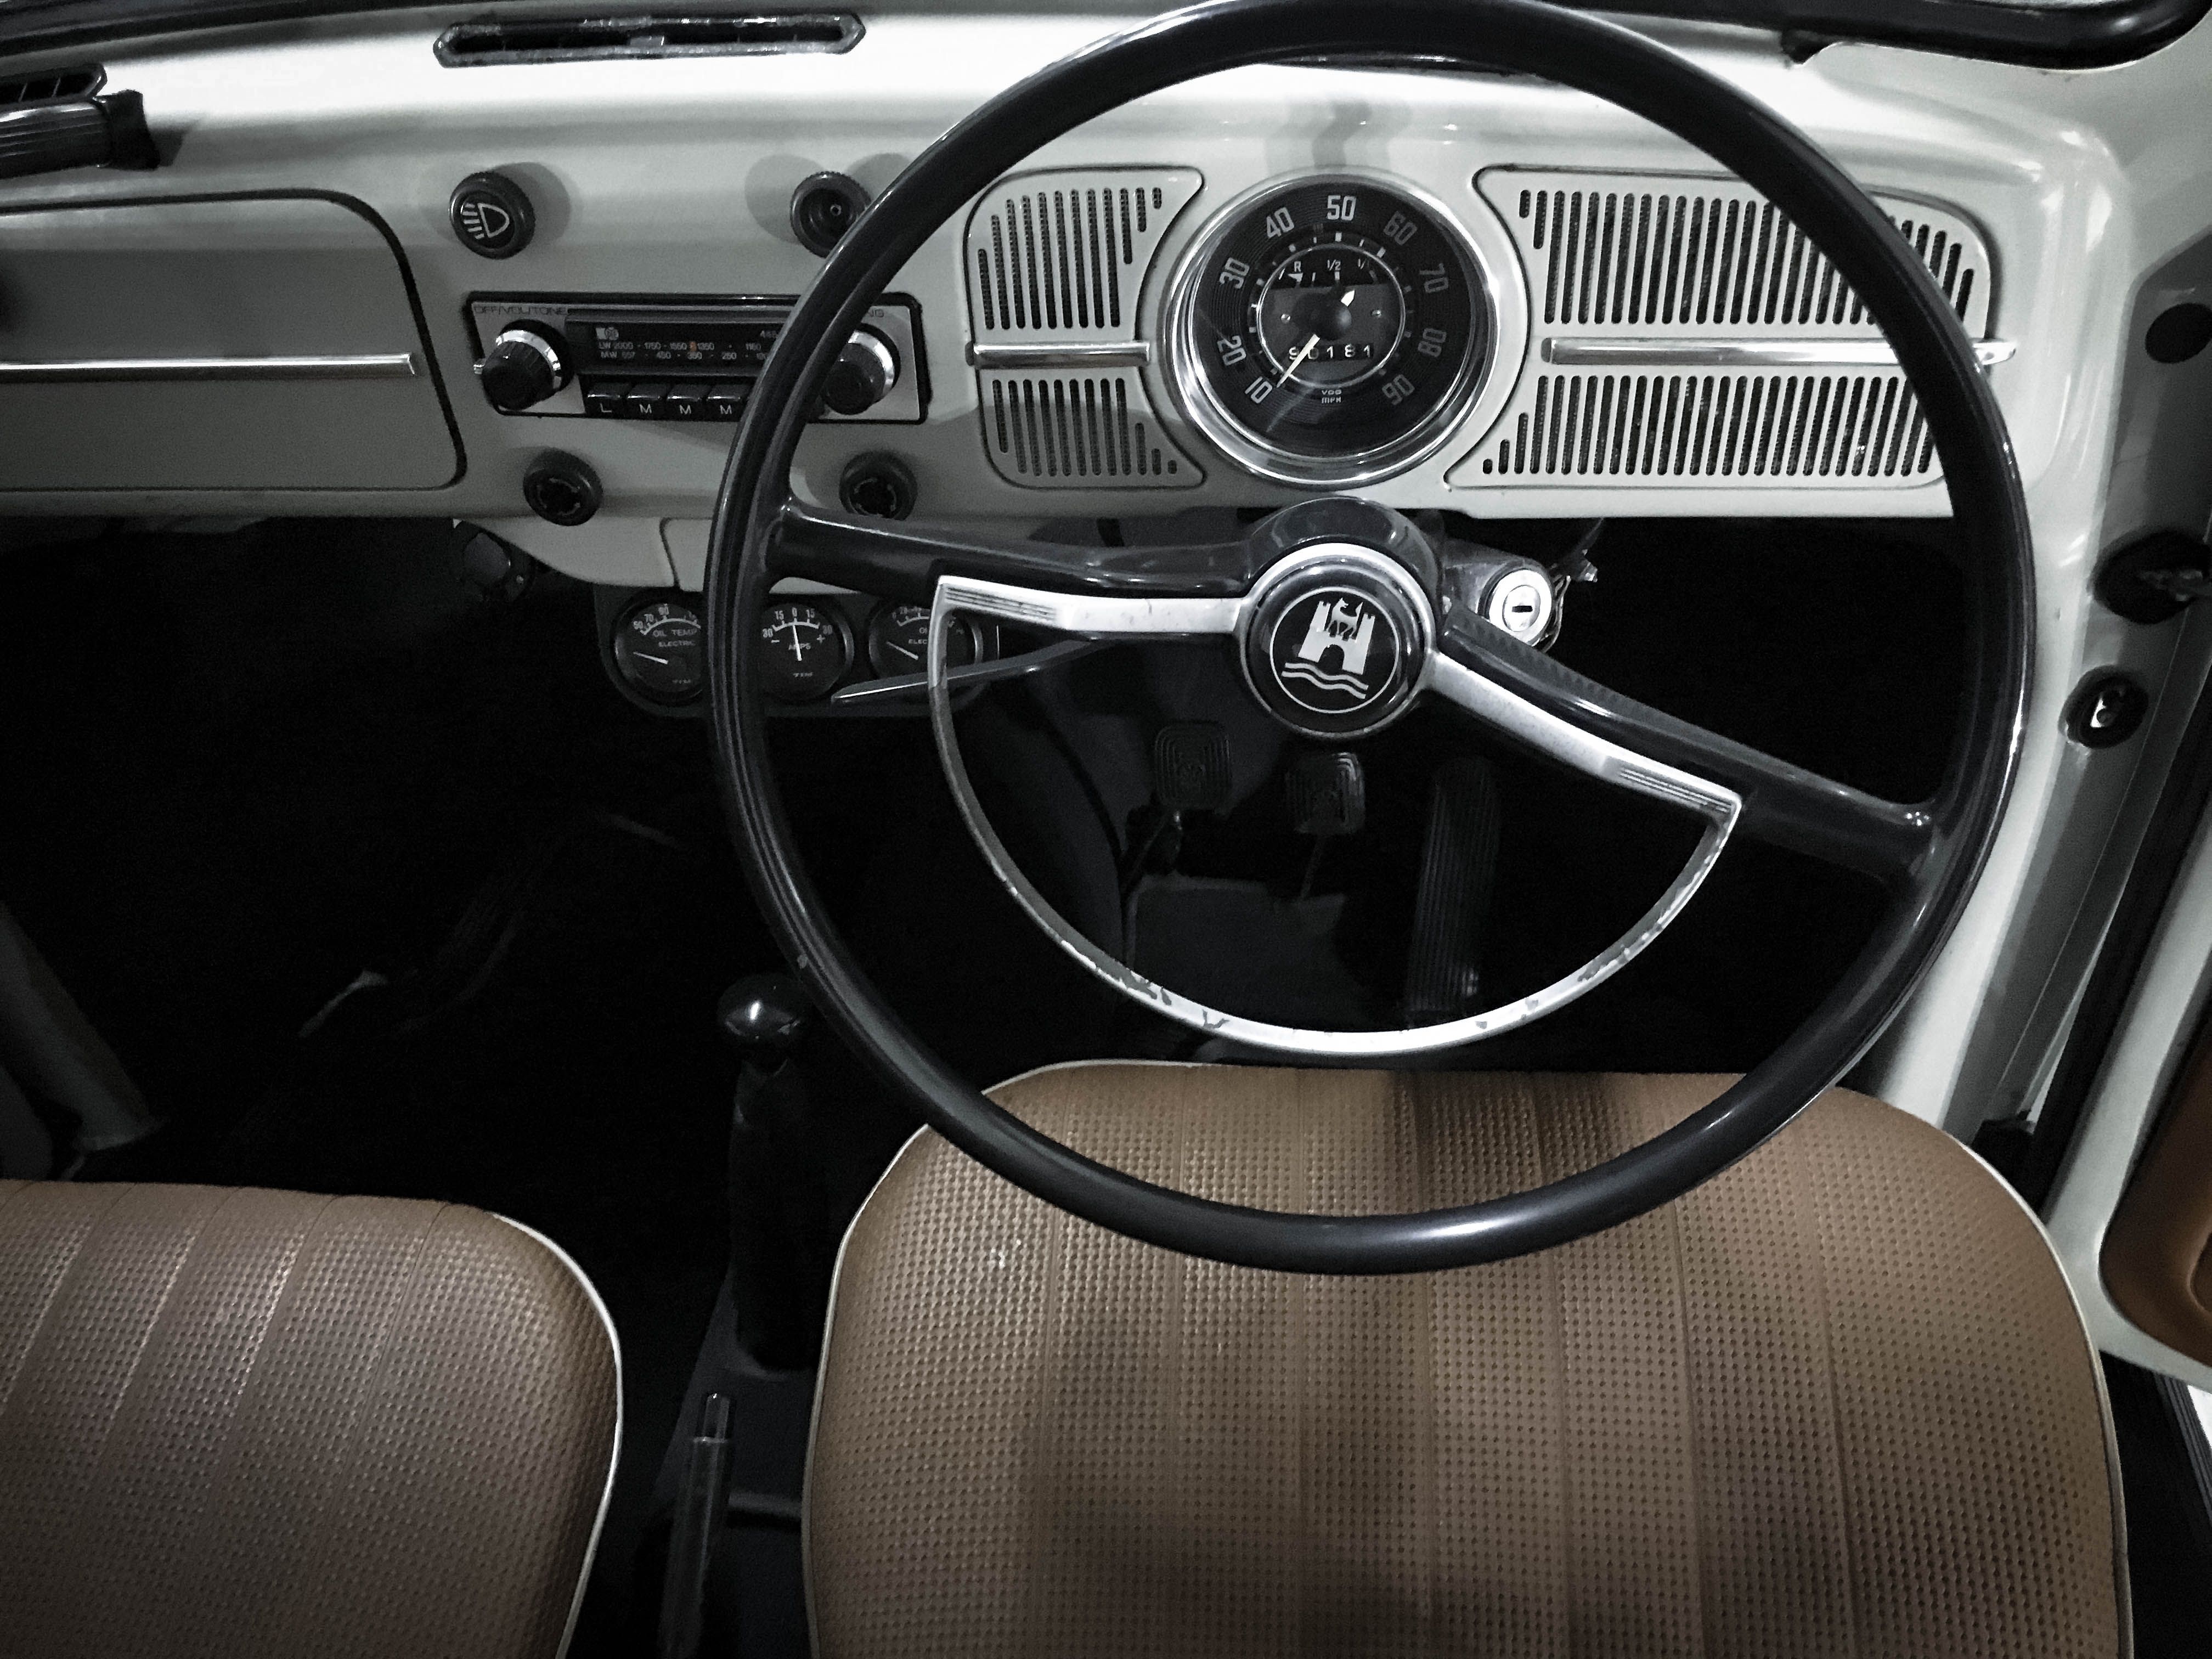 VW-Beetle-interior